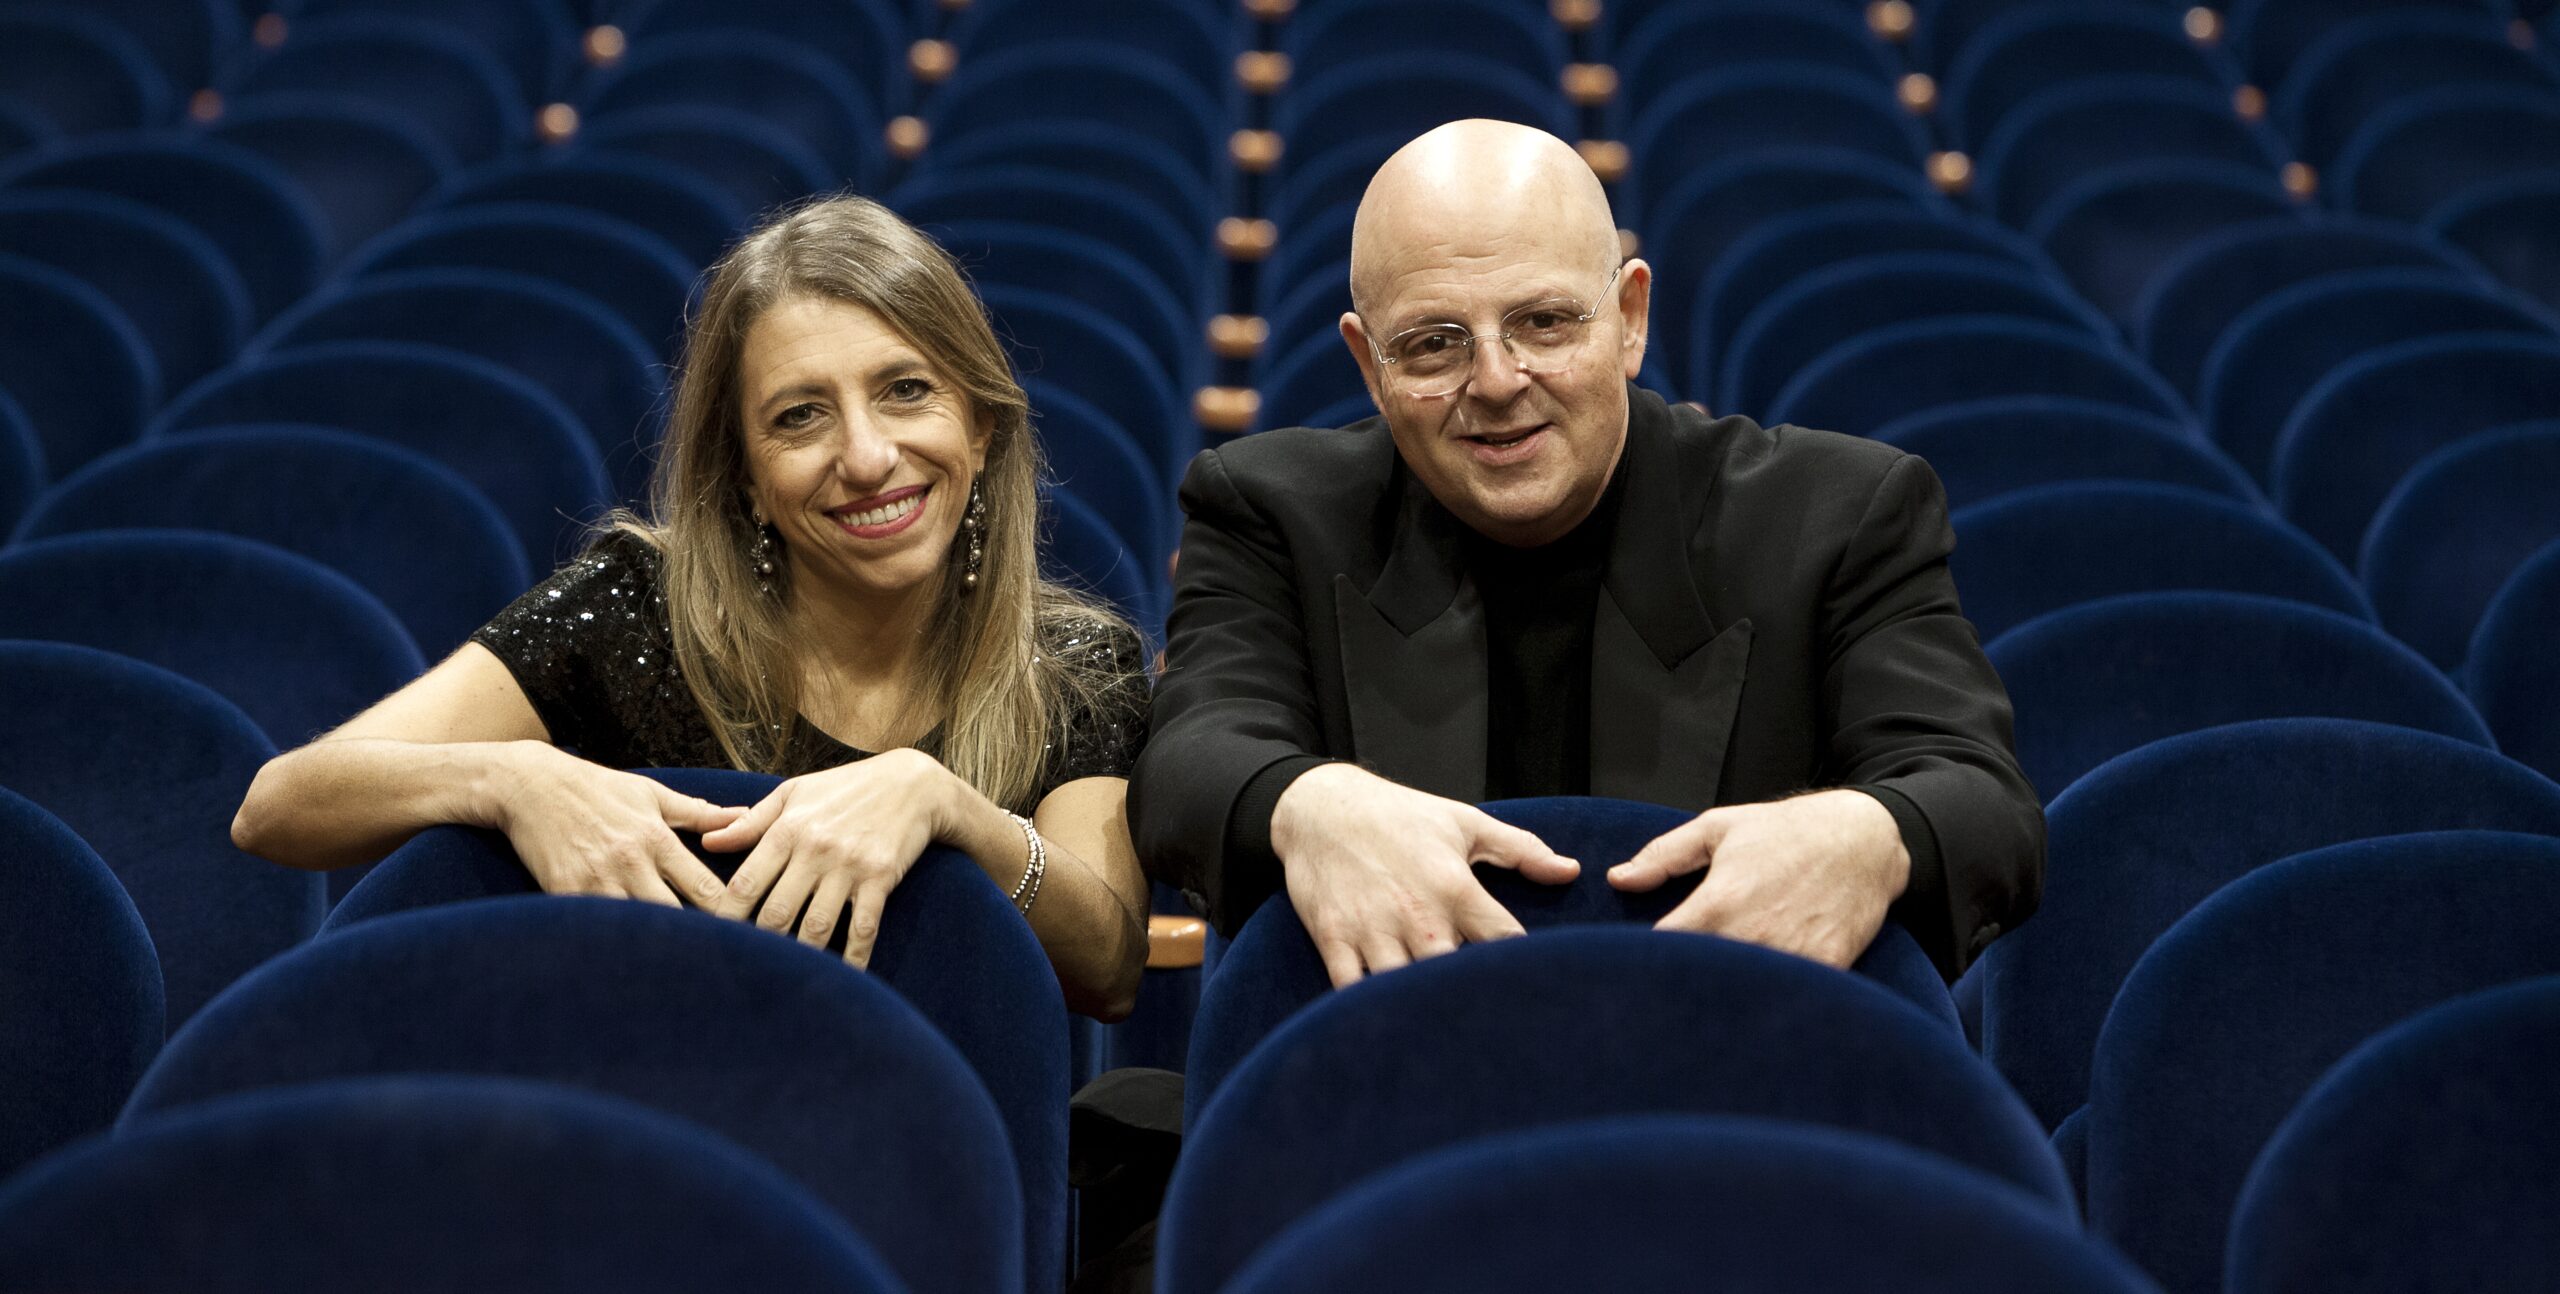 Duo pianistico Giuseppe Maiorca e Maria Roberta Milano